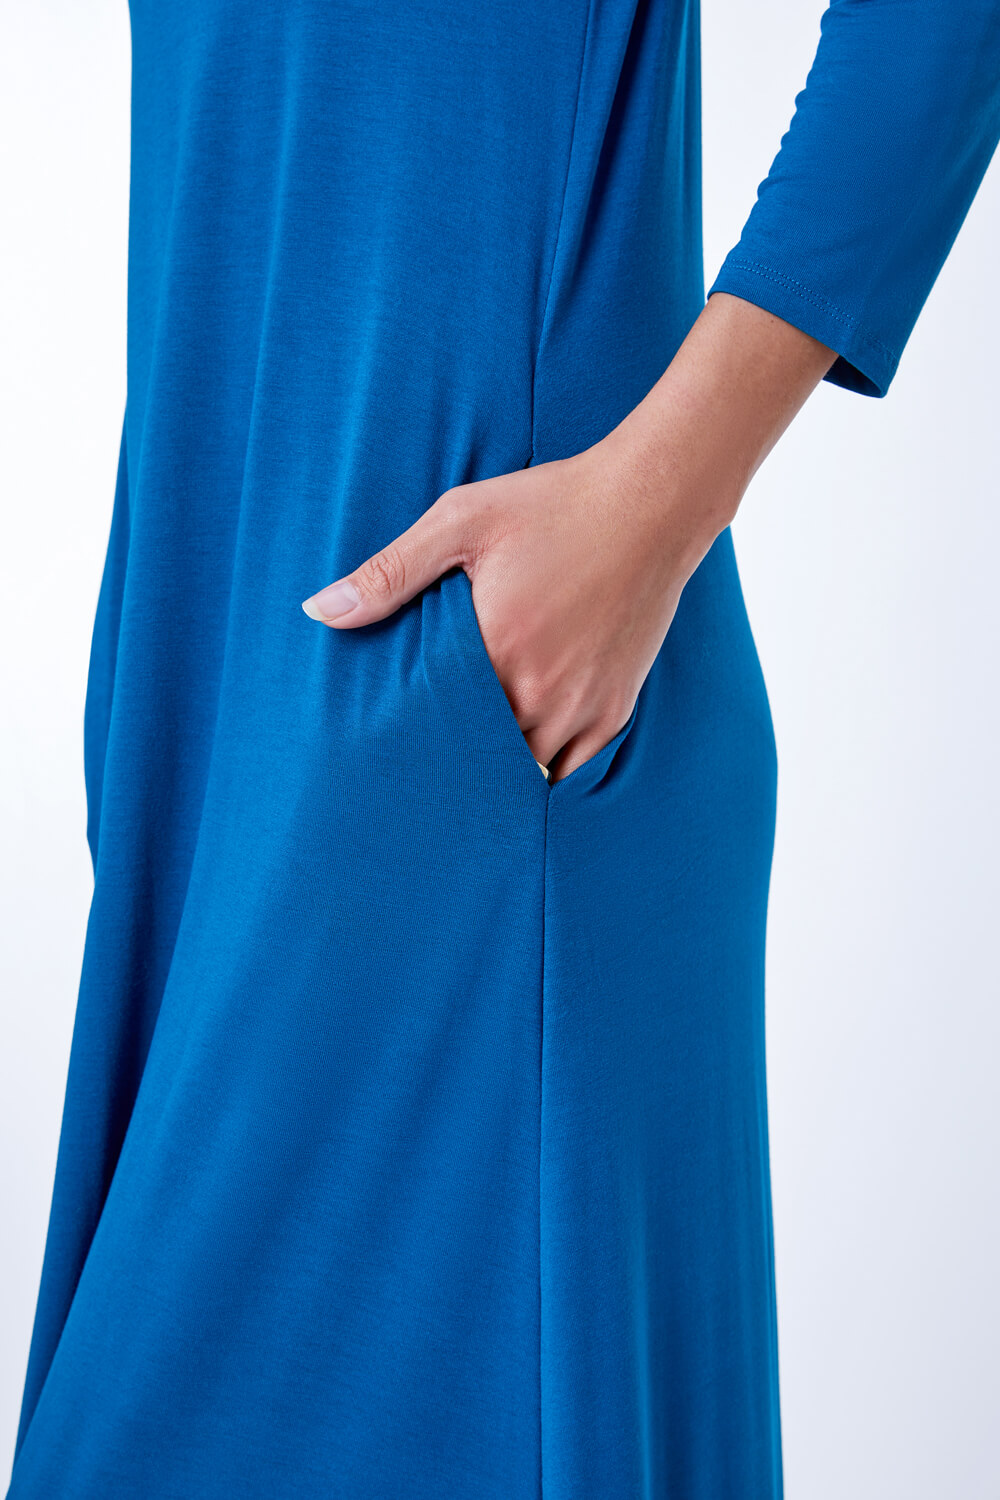 Teal Stretch Pocket Detail Midi Dress, Image 5 of 5